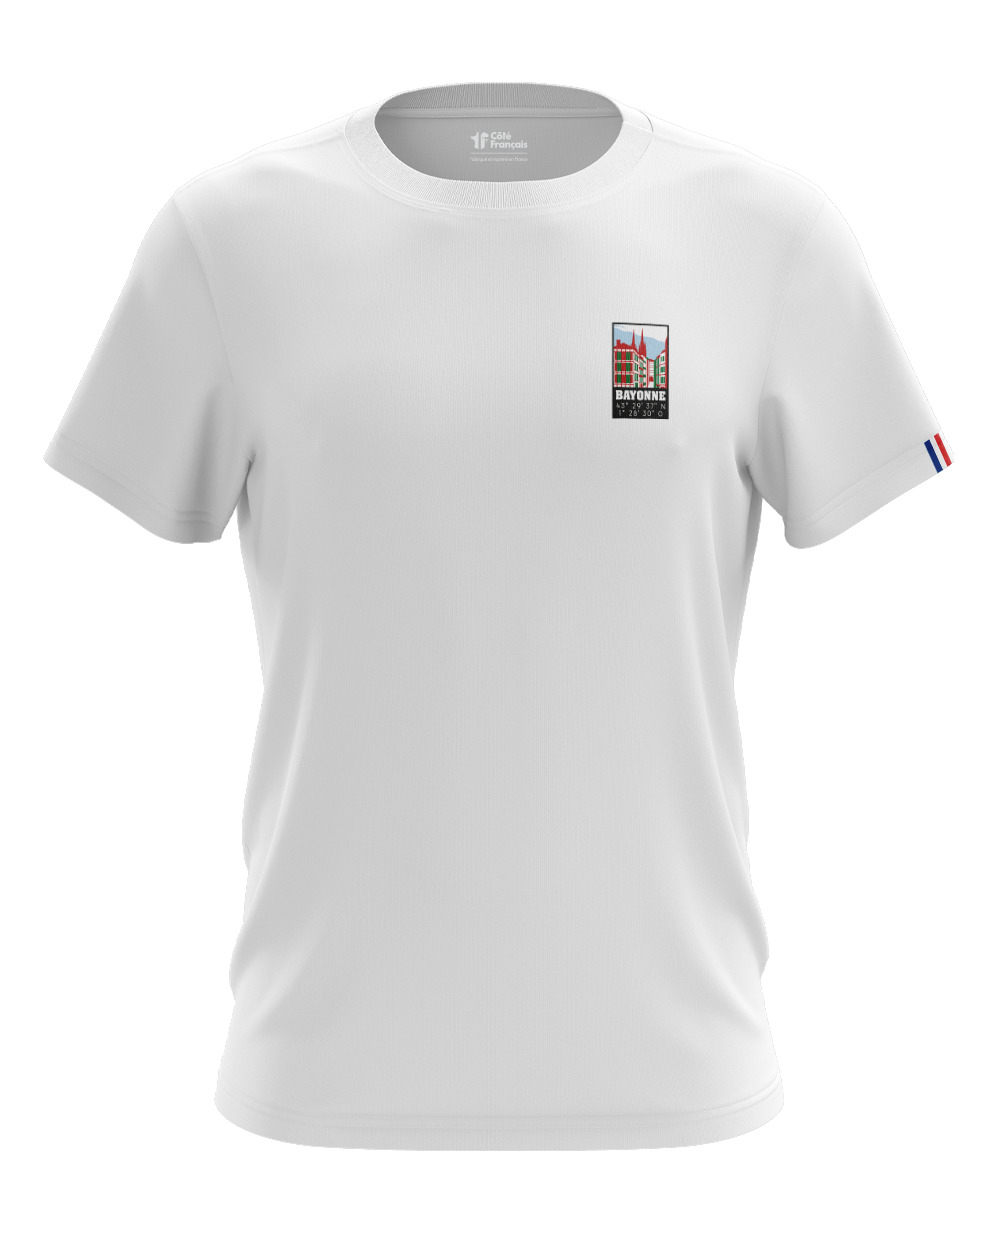 T-shirt "Ville de Bayonne" - blanc